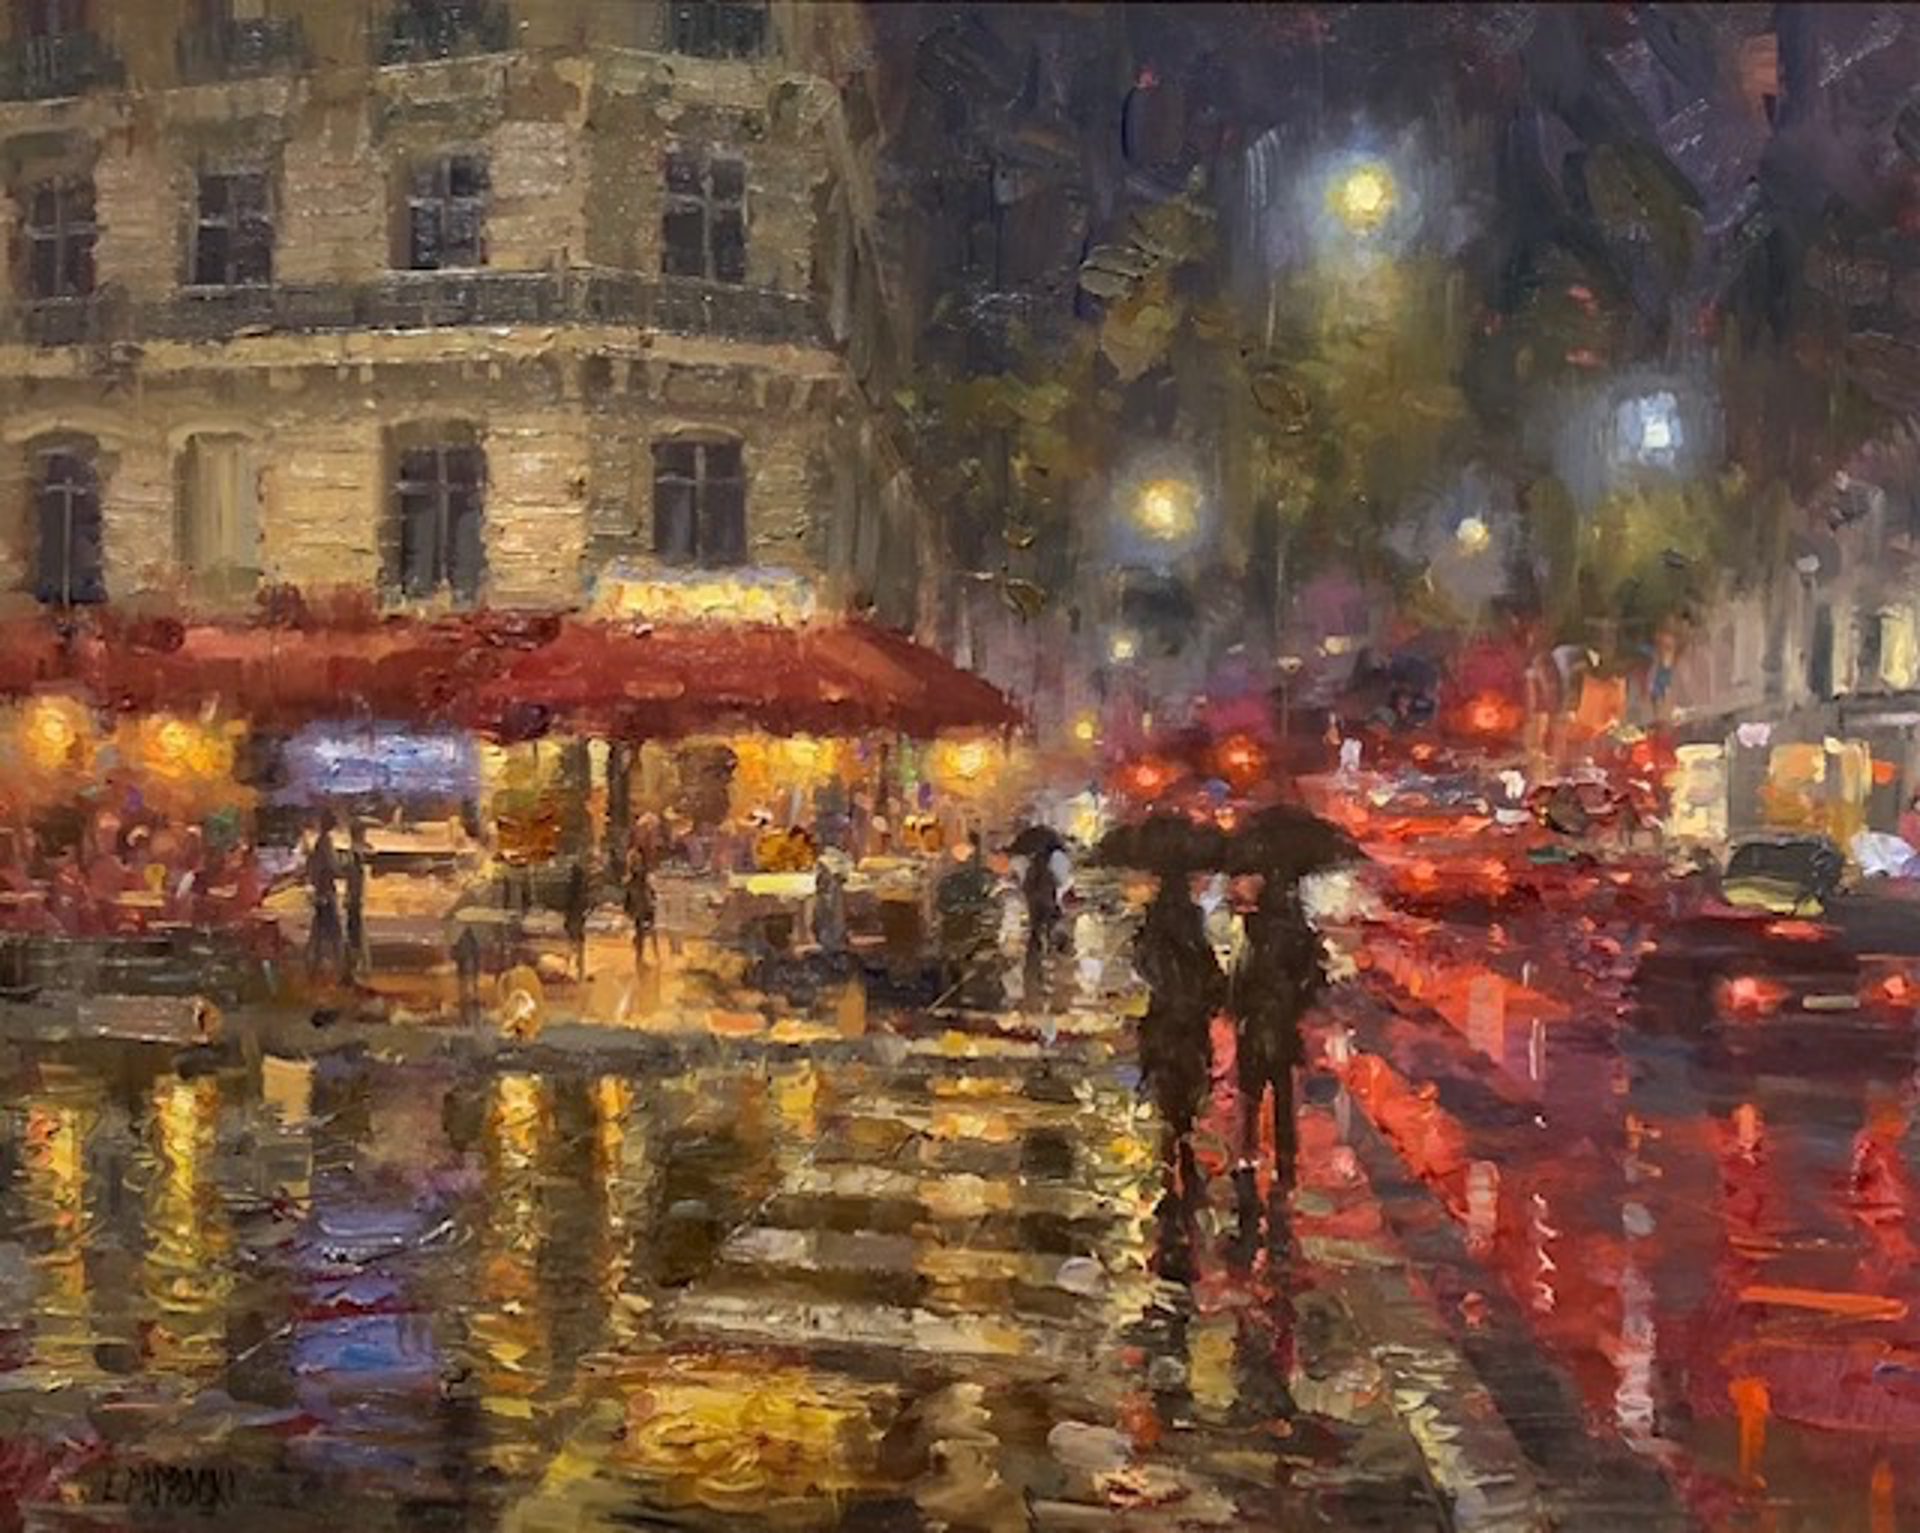 "Rainy Night, St. Germain, Paris" by EJ Paprocki